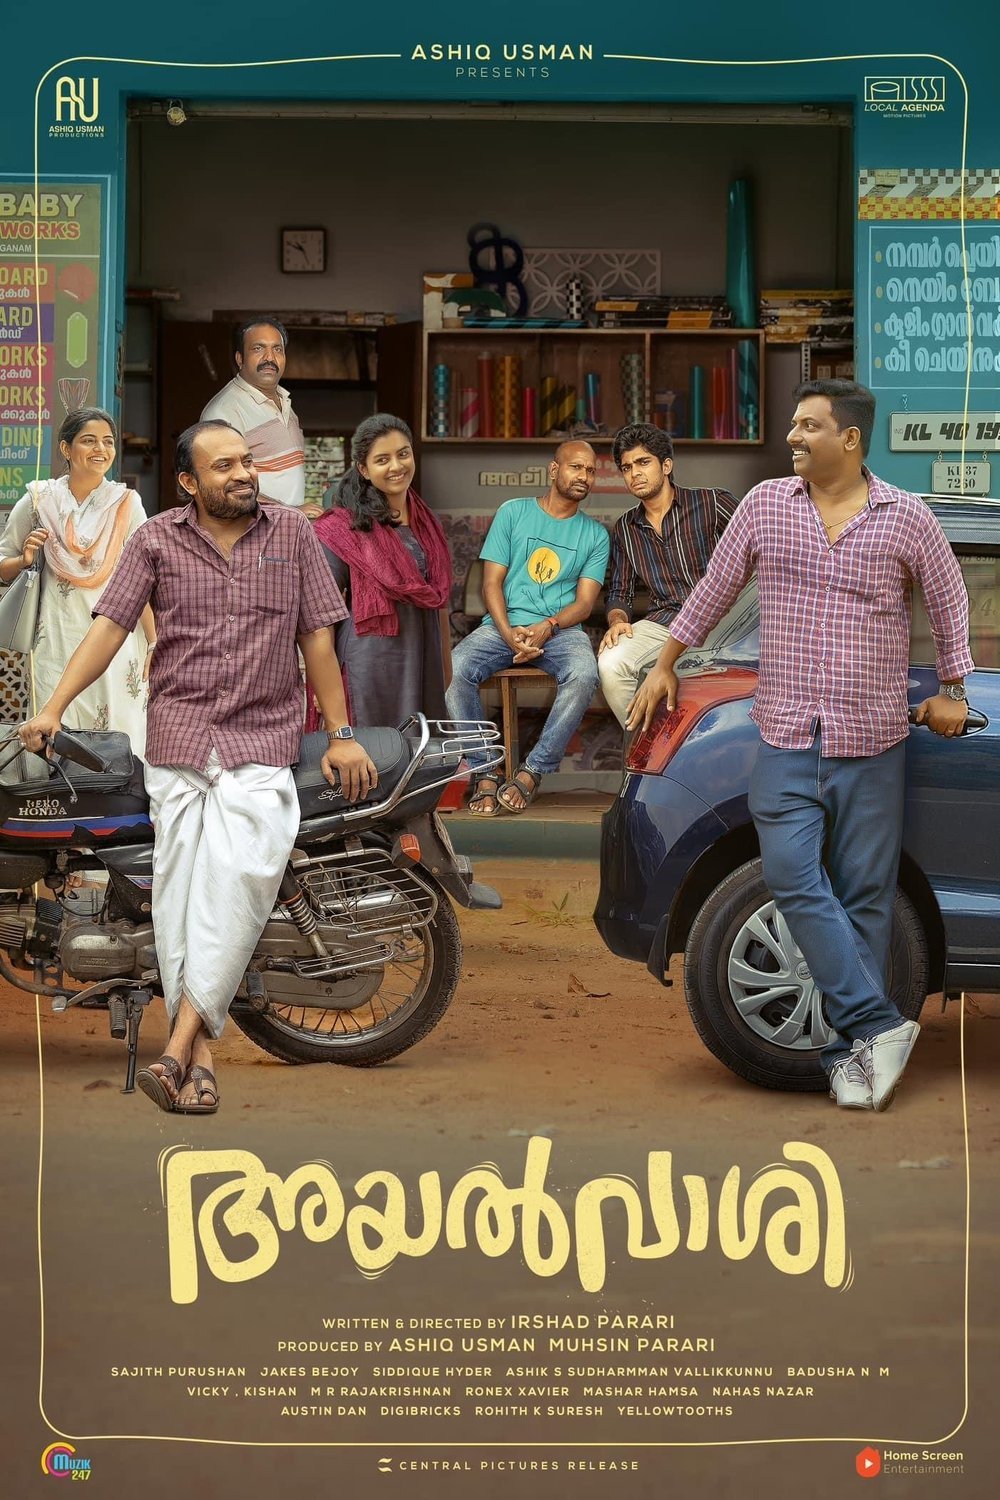 Malayalam poster of the movie Ayalvaashi